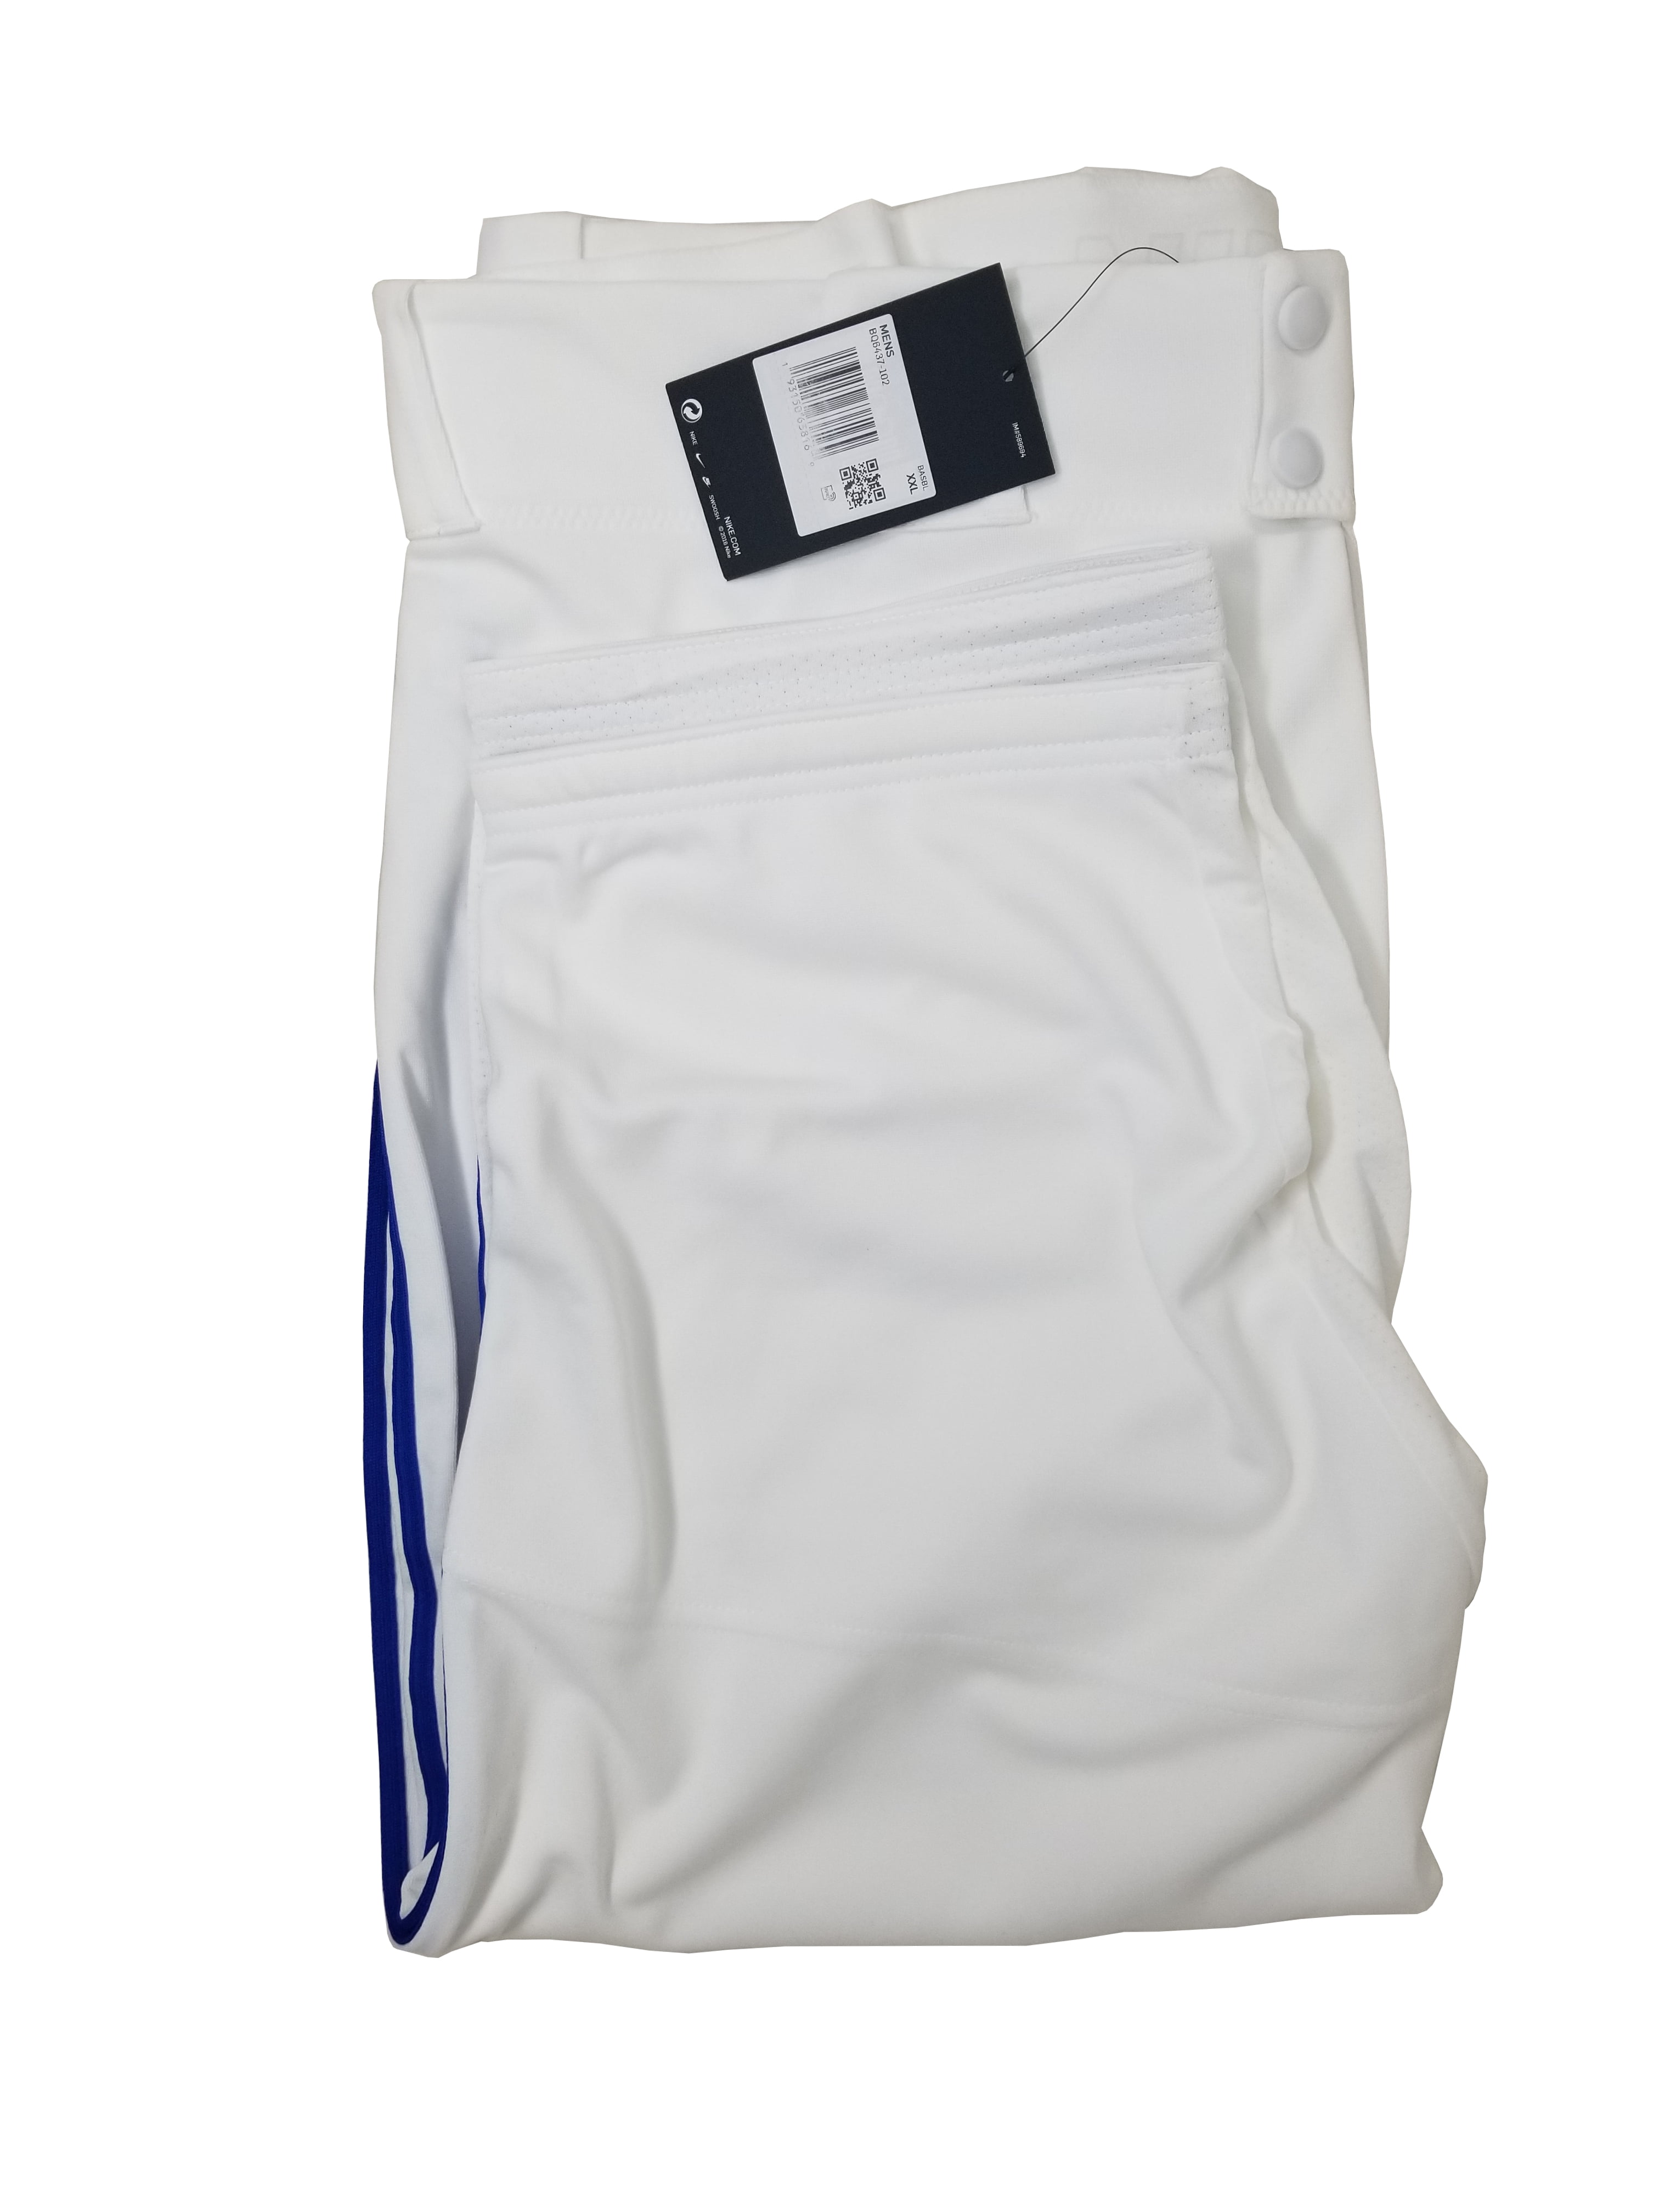 Asumir Hay una tendencia frontera Nike Men's Baseball Pant White with Blue Lining - Size XXL - Walmart.com